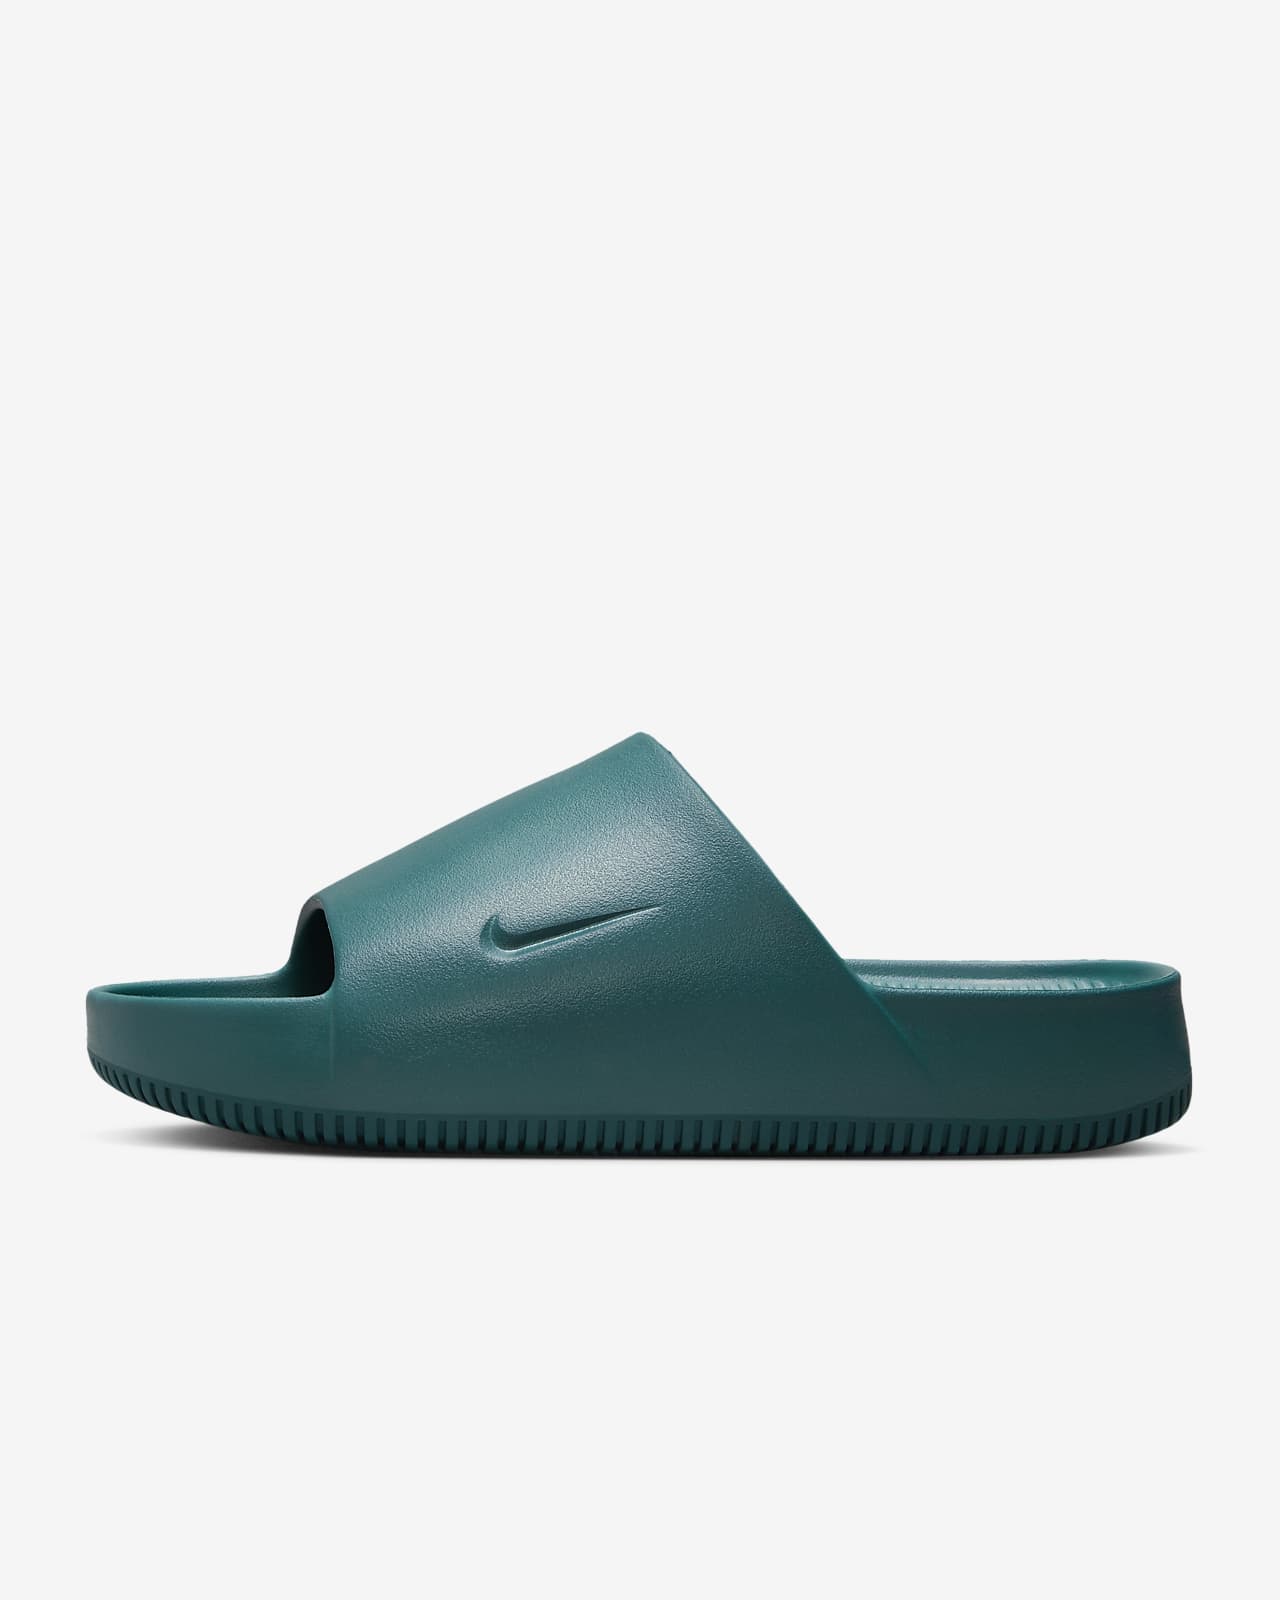 Nike Navy Purple Slides Slippers Sz 8 Air Foam Cushion Women's Adjustable  Strap | eBay